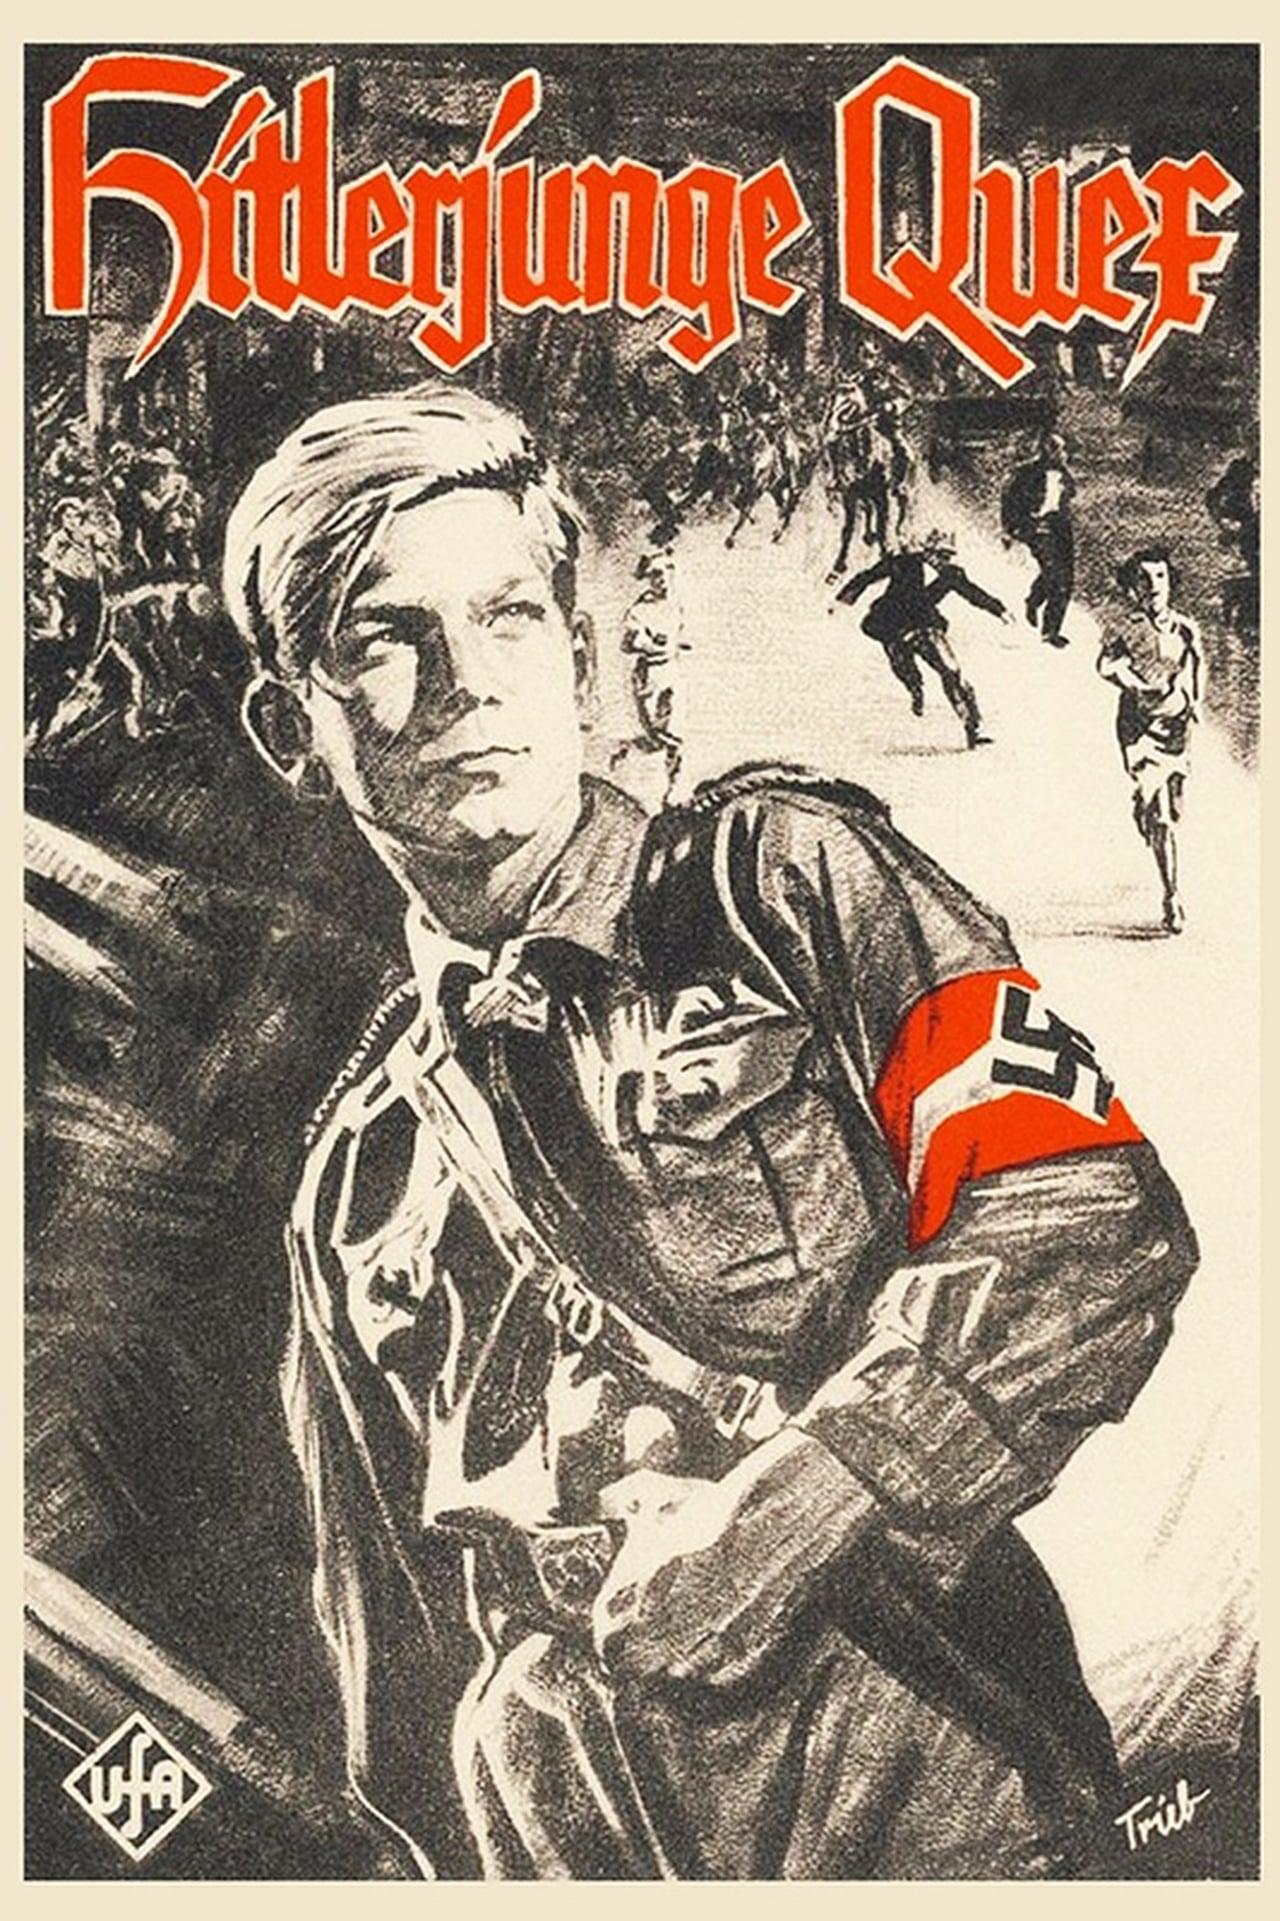 Hitlerjunge Quex poster